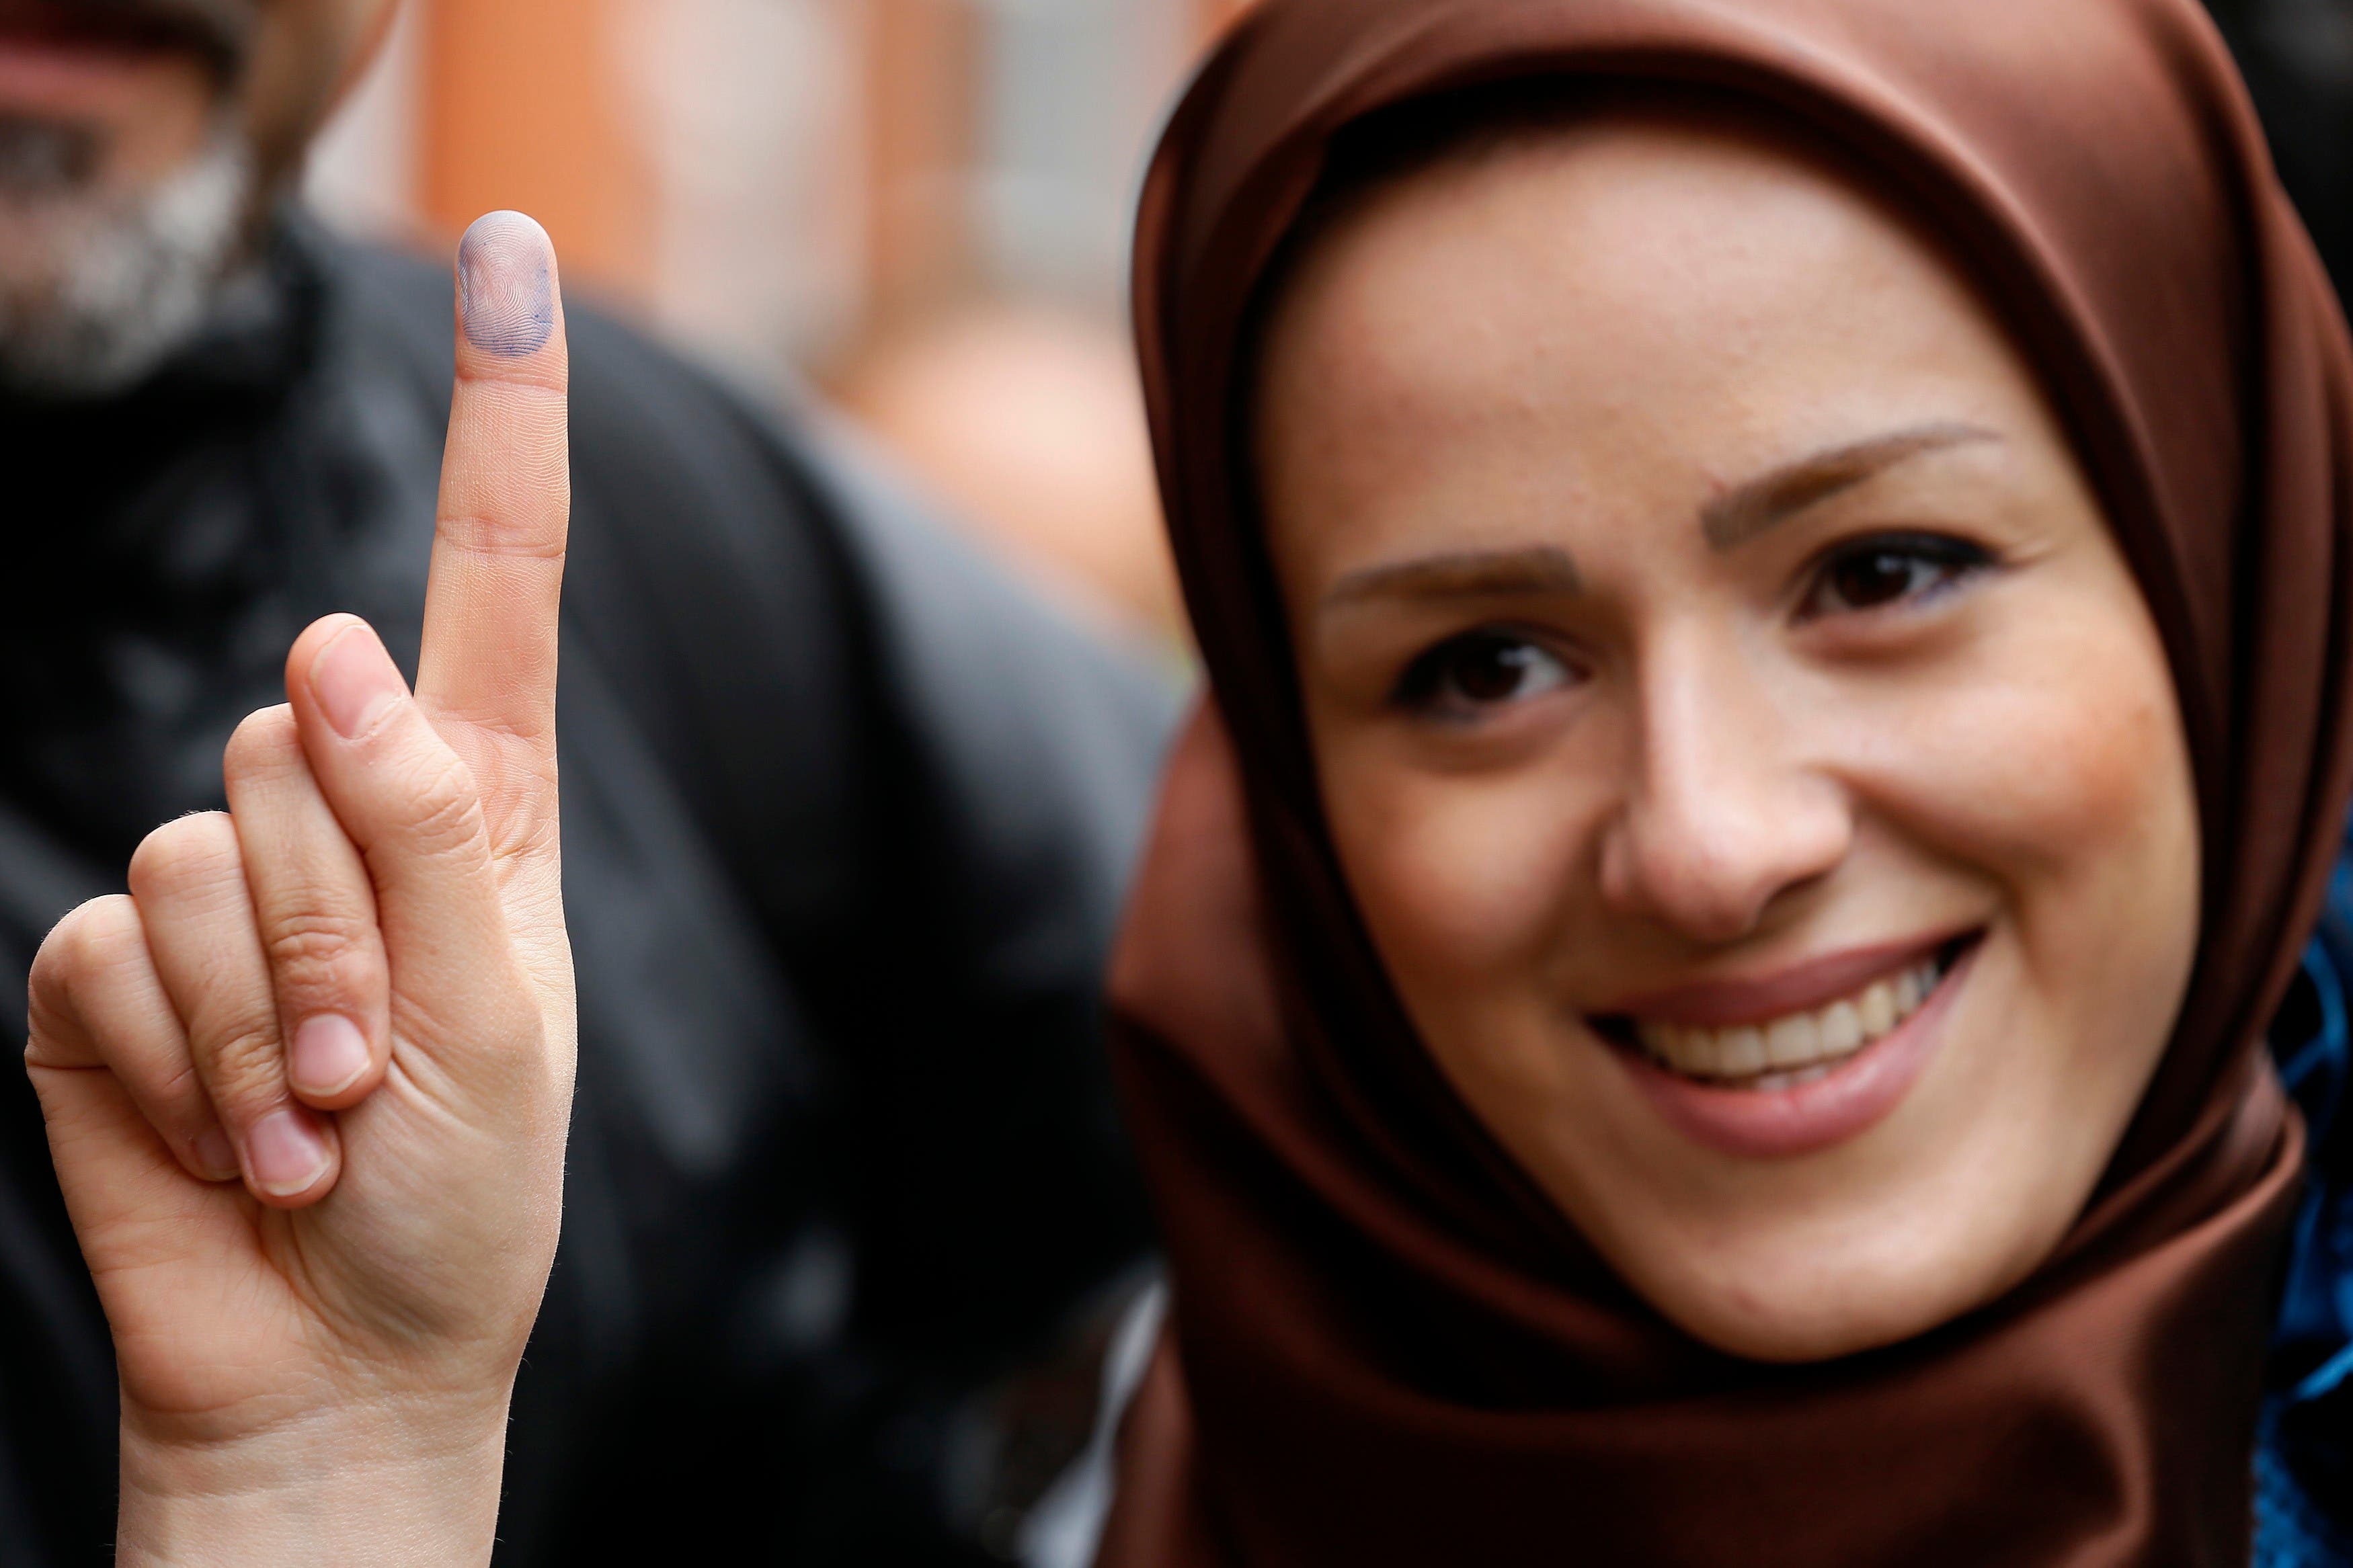 Iranian elections 2013